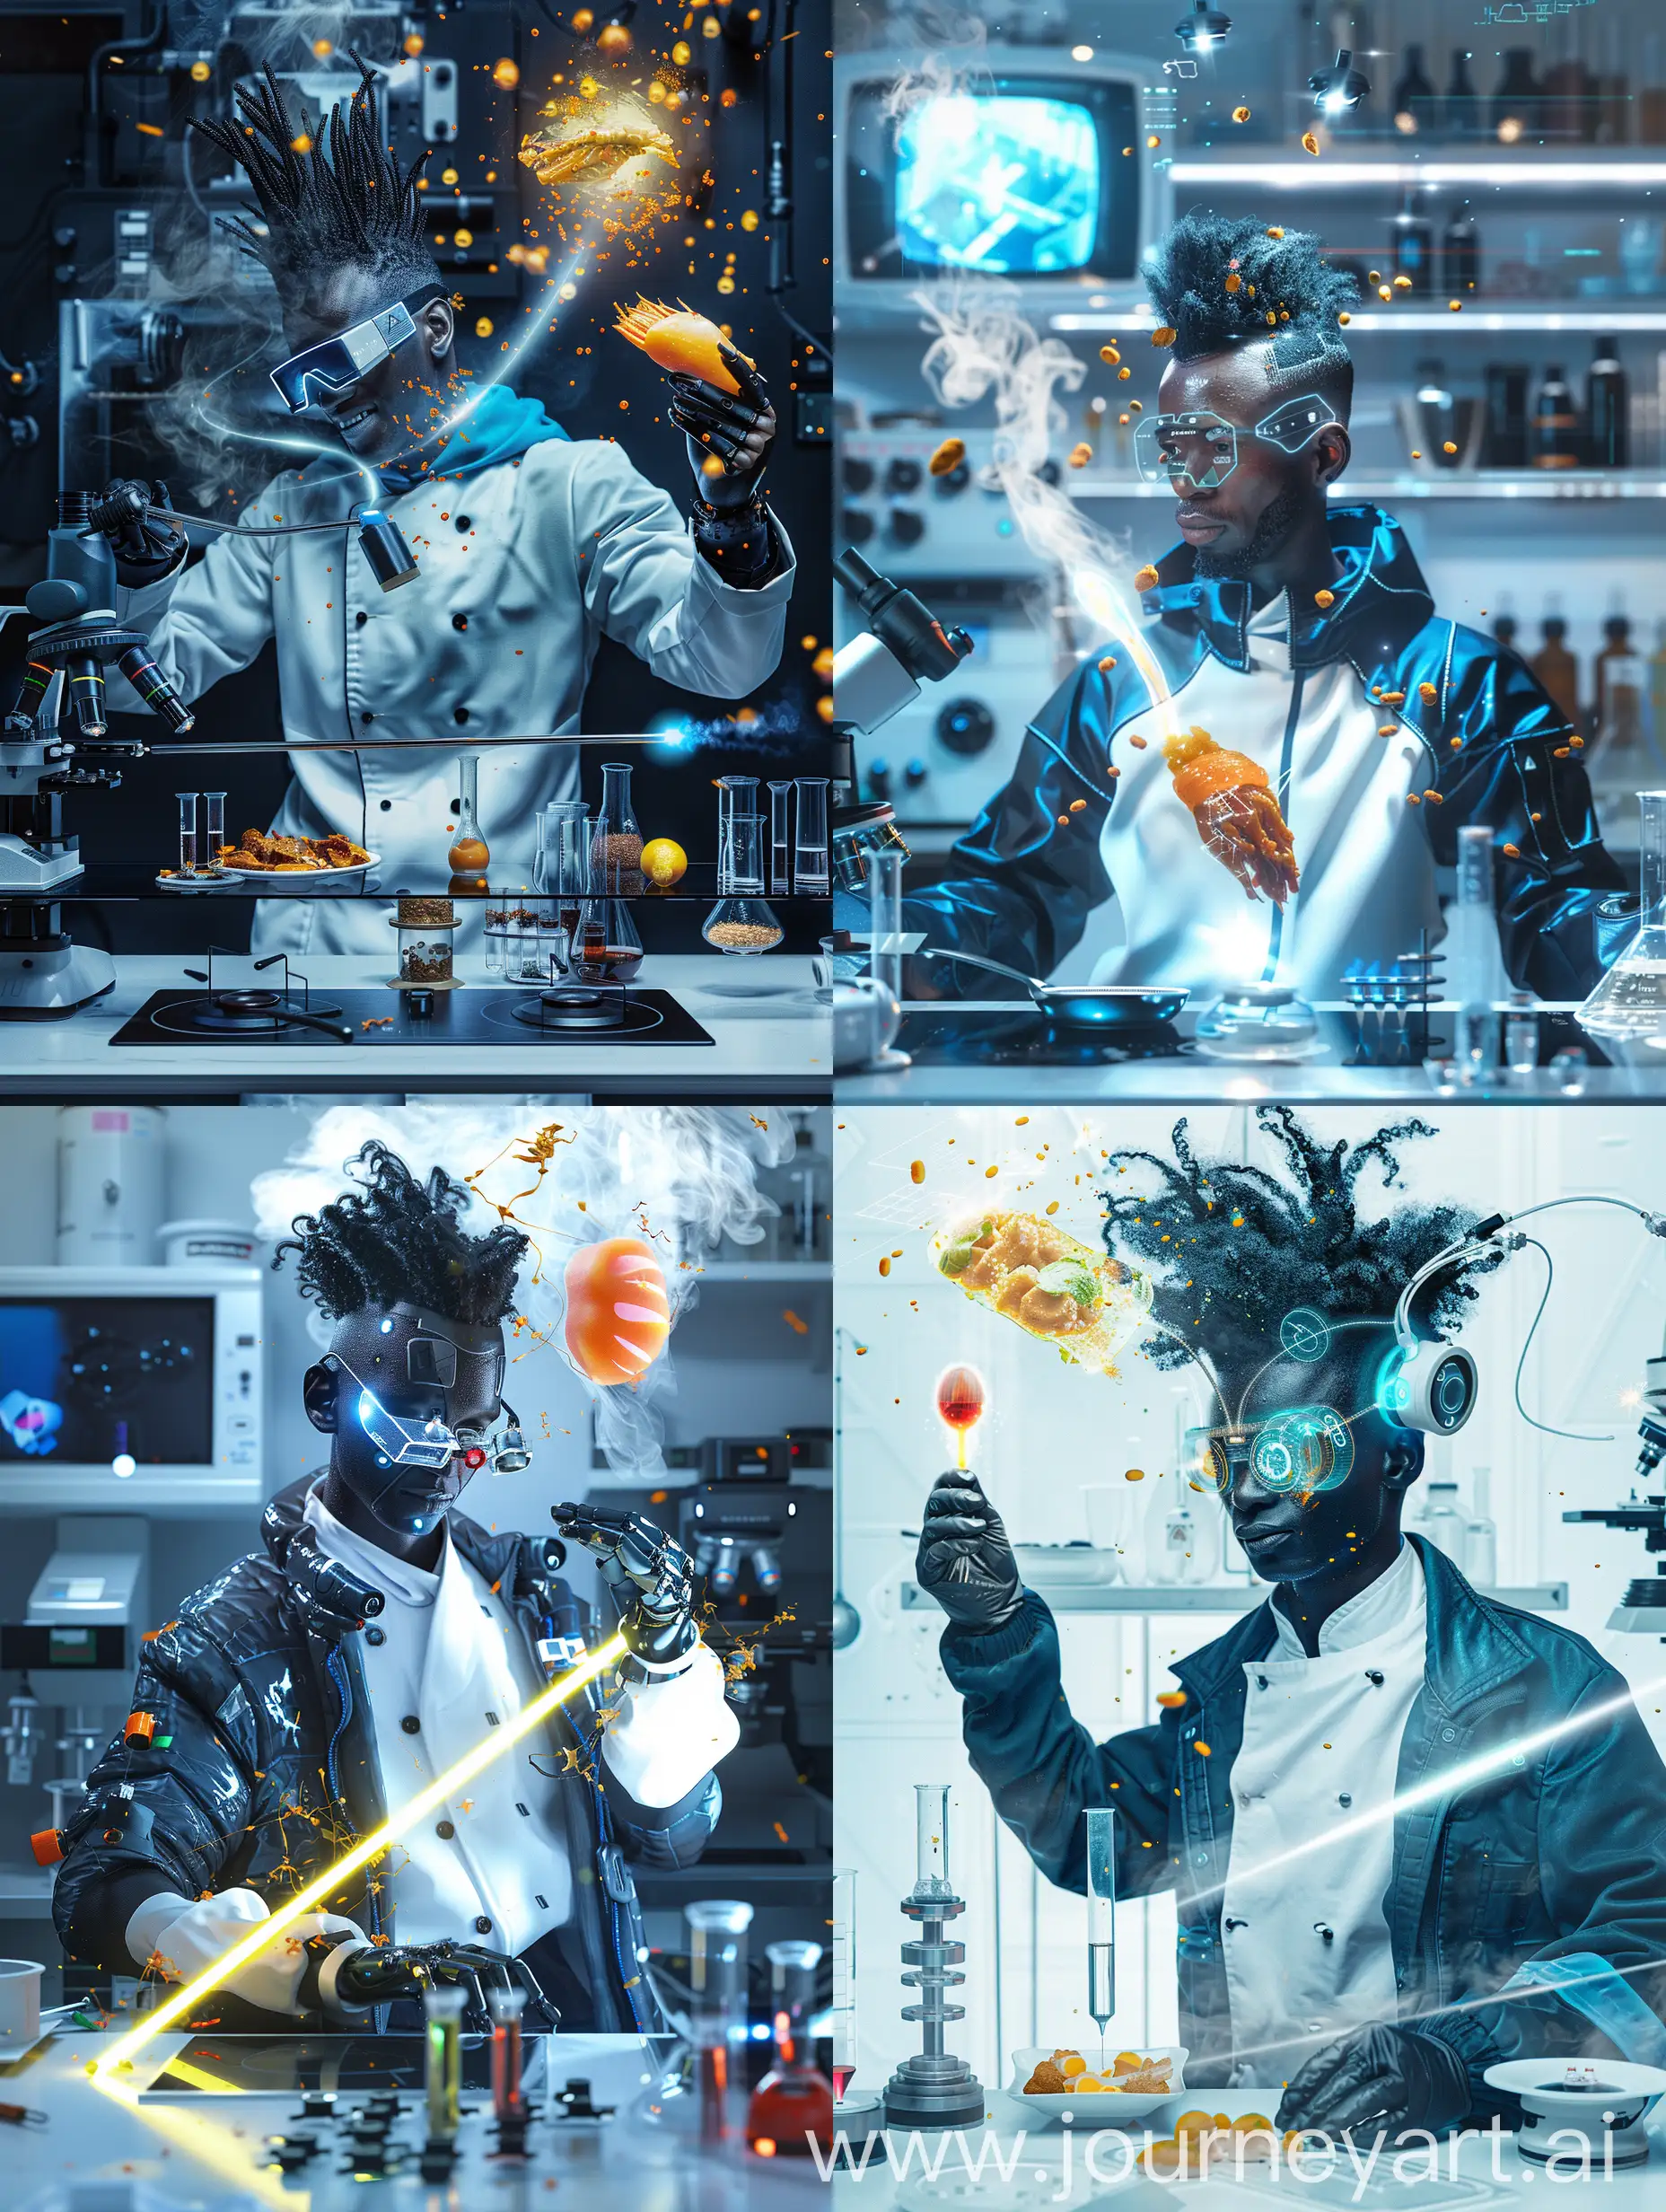 Futuristic-Black-Android-Male-Food-Engineer-Creating-Molecular-Gastronomy-Cuisine